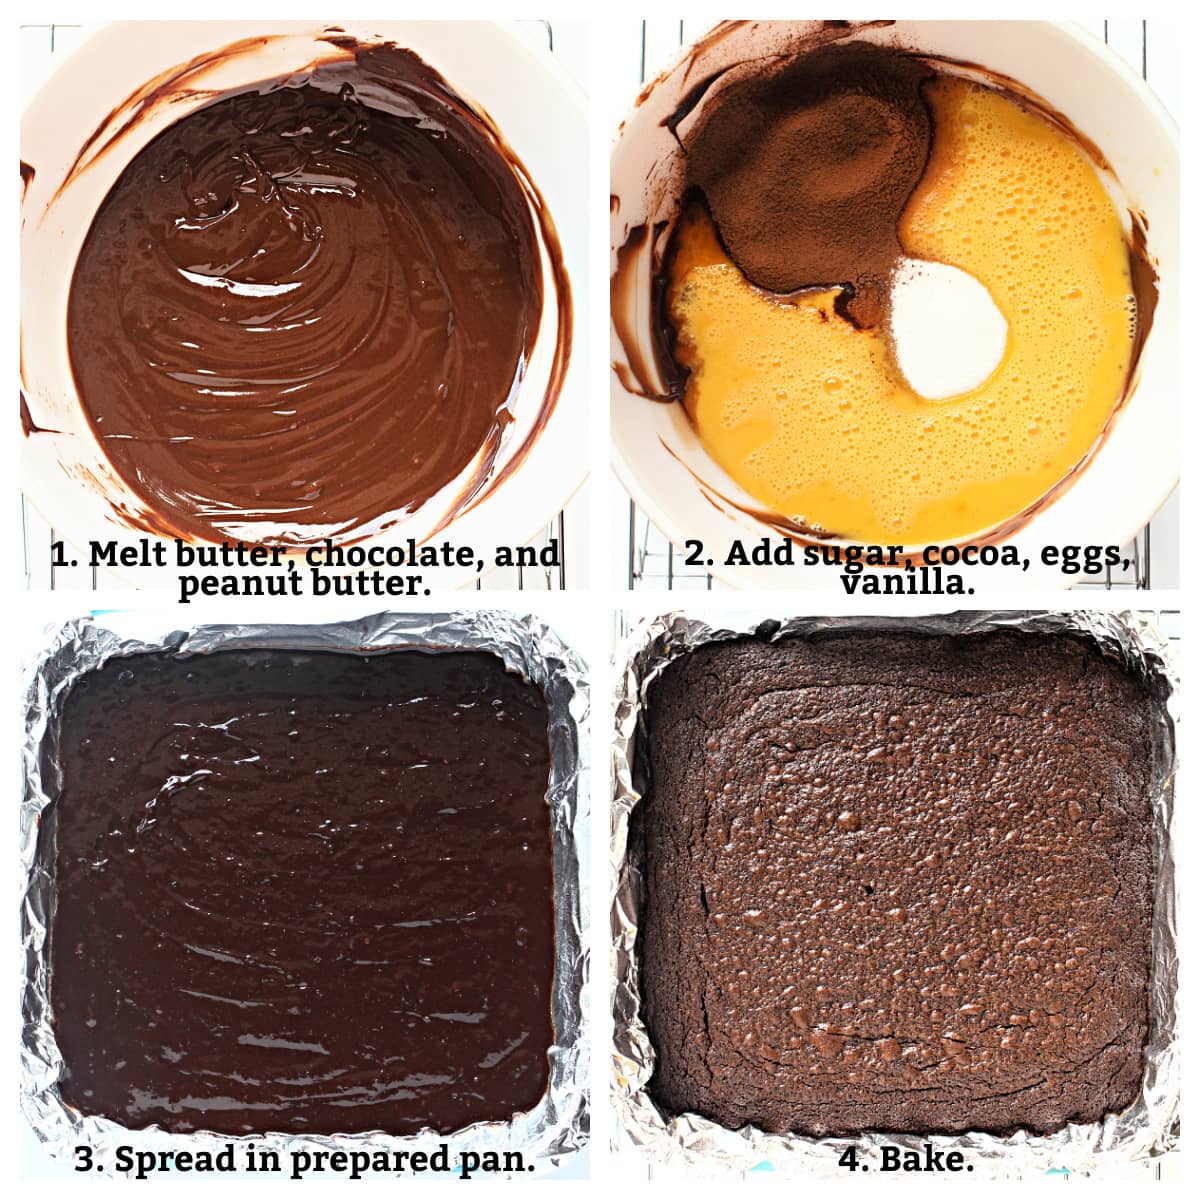 Instructions: melt butter,chocolate, peanut butter, add sugar, cocoa, eggs, vanilla, spread in pan, bake.